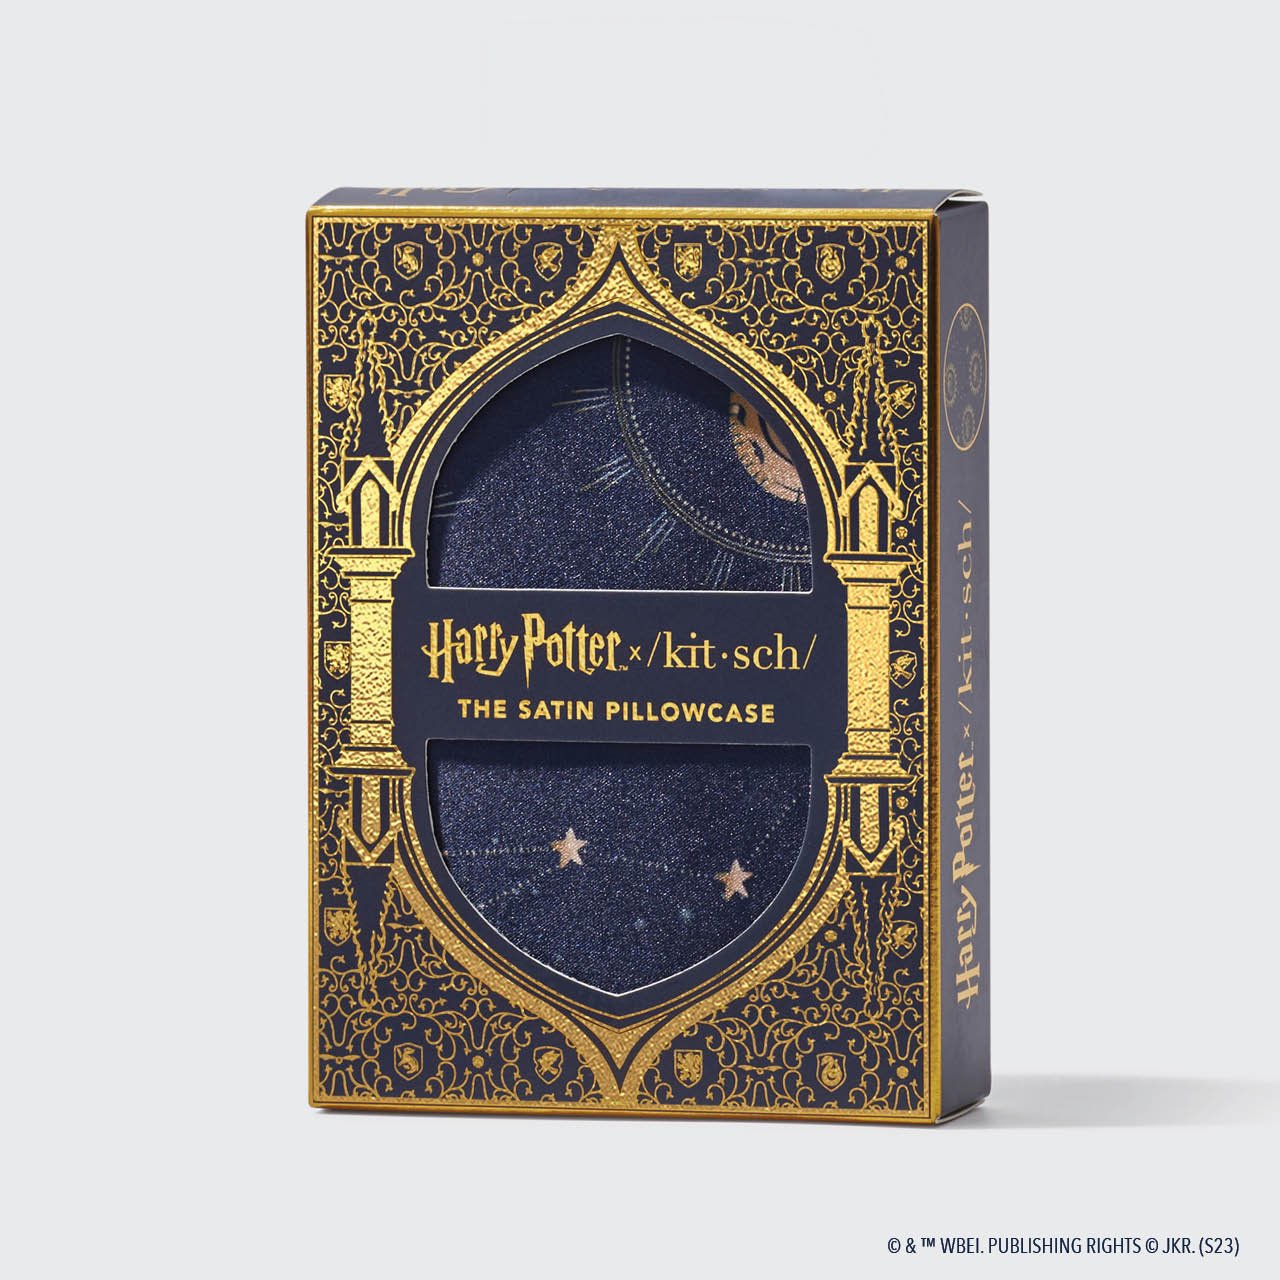 Harry Potter x Kitsch Sammlerpaket